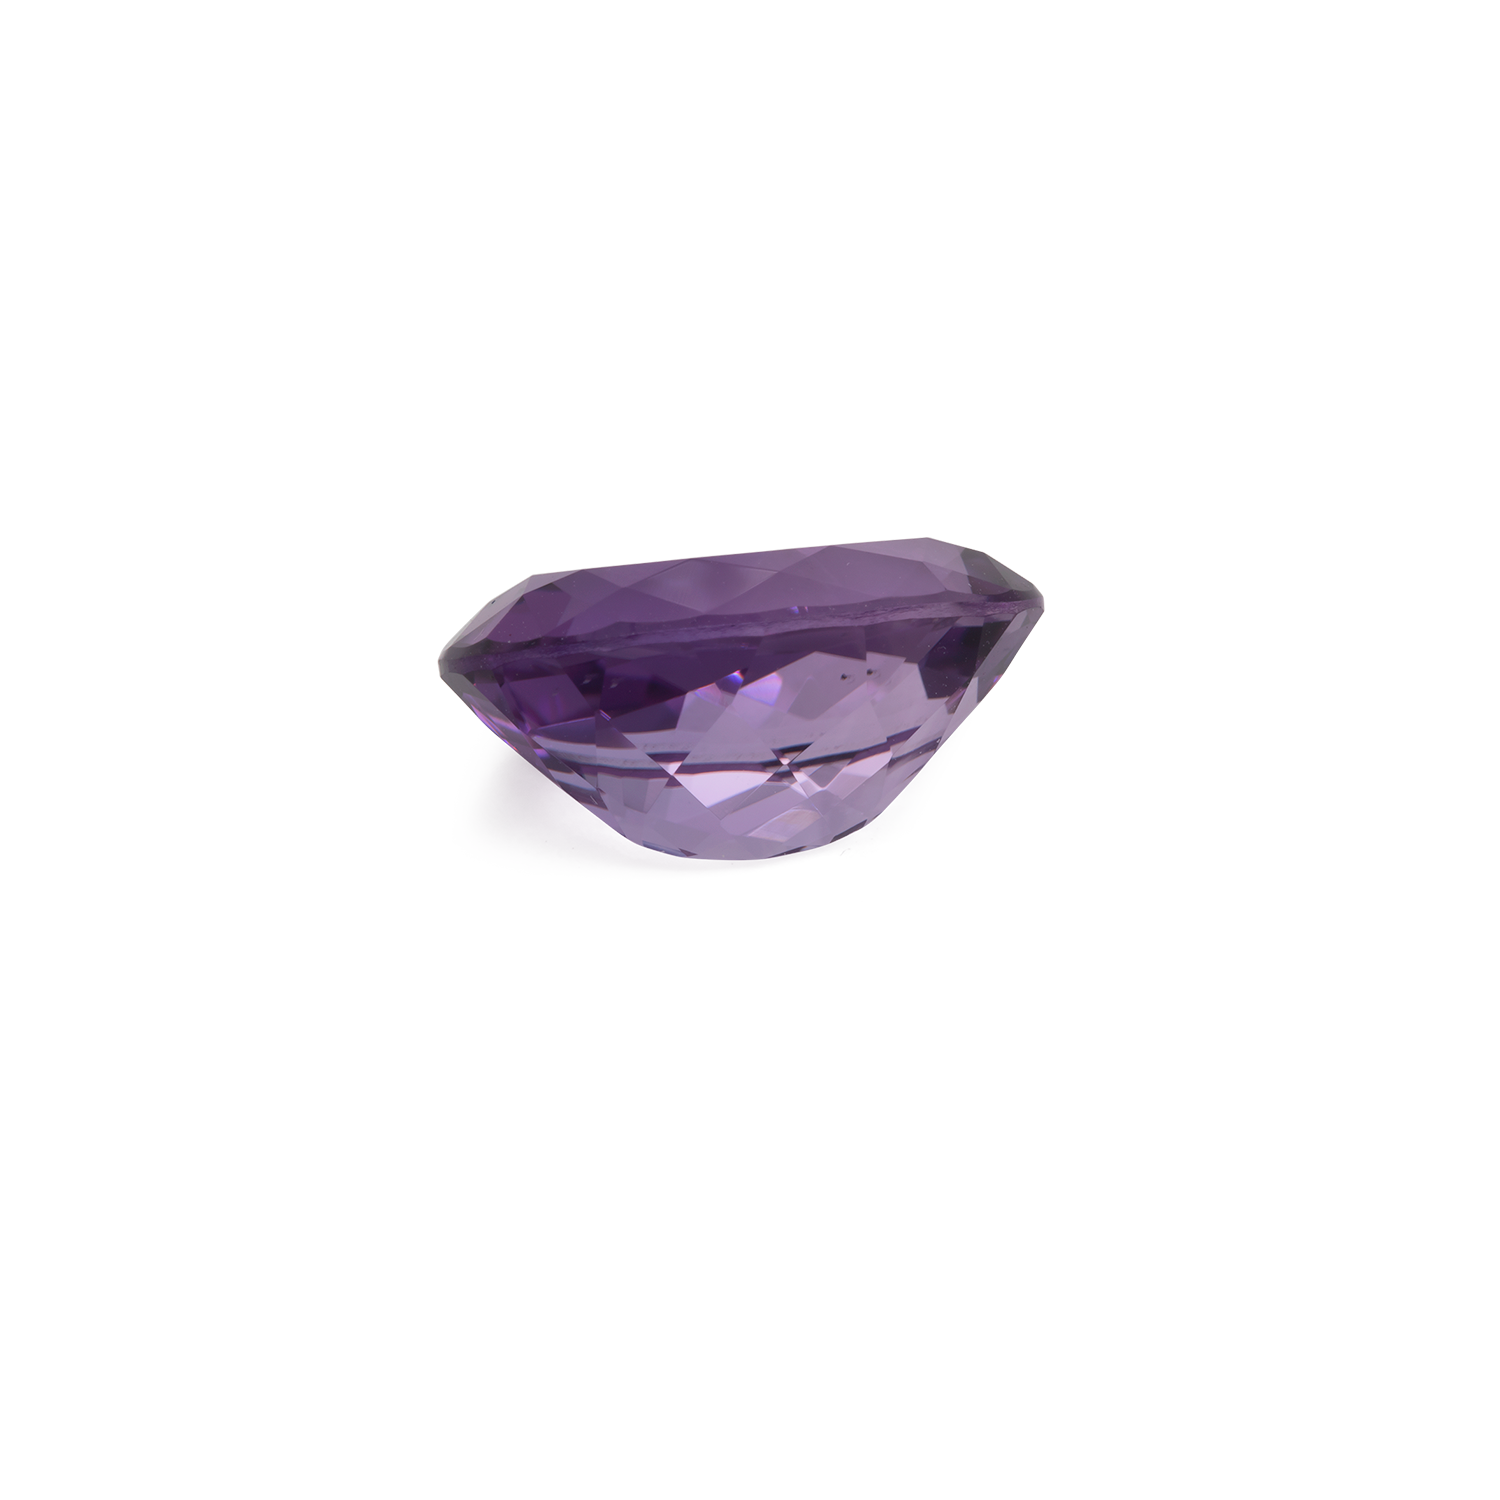 Amethyst - purple, oval, 16.1x12.1 mm, 8.56 cts, No. AMY72001